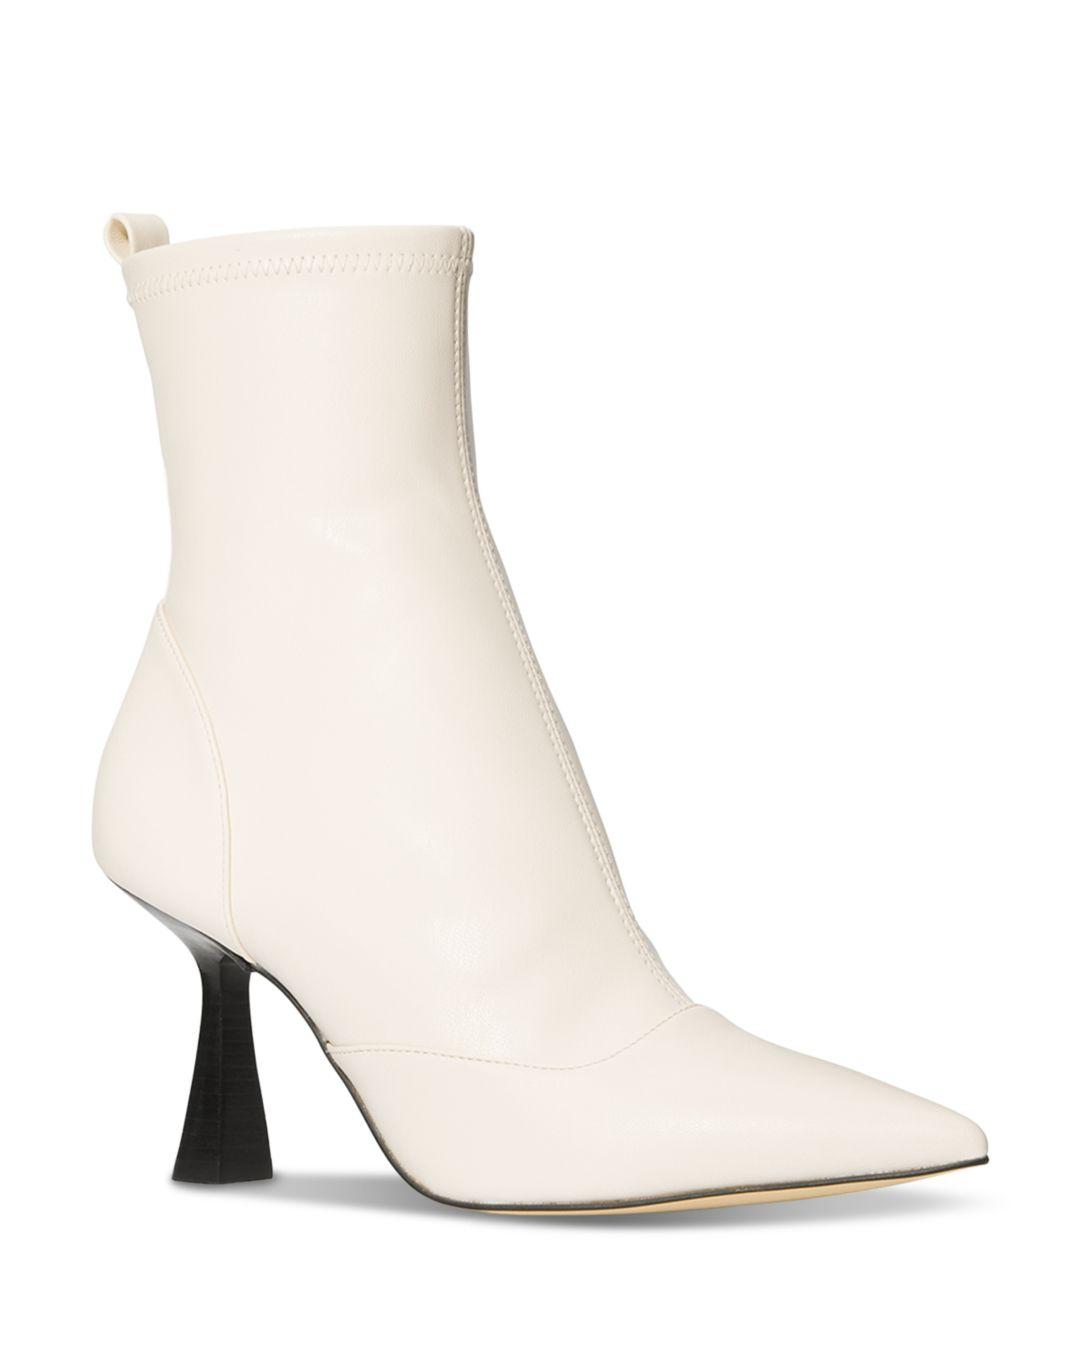 Michael Kors Clara Pointed Toe High Heel Booties in White | Lyst